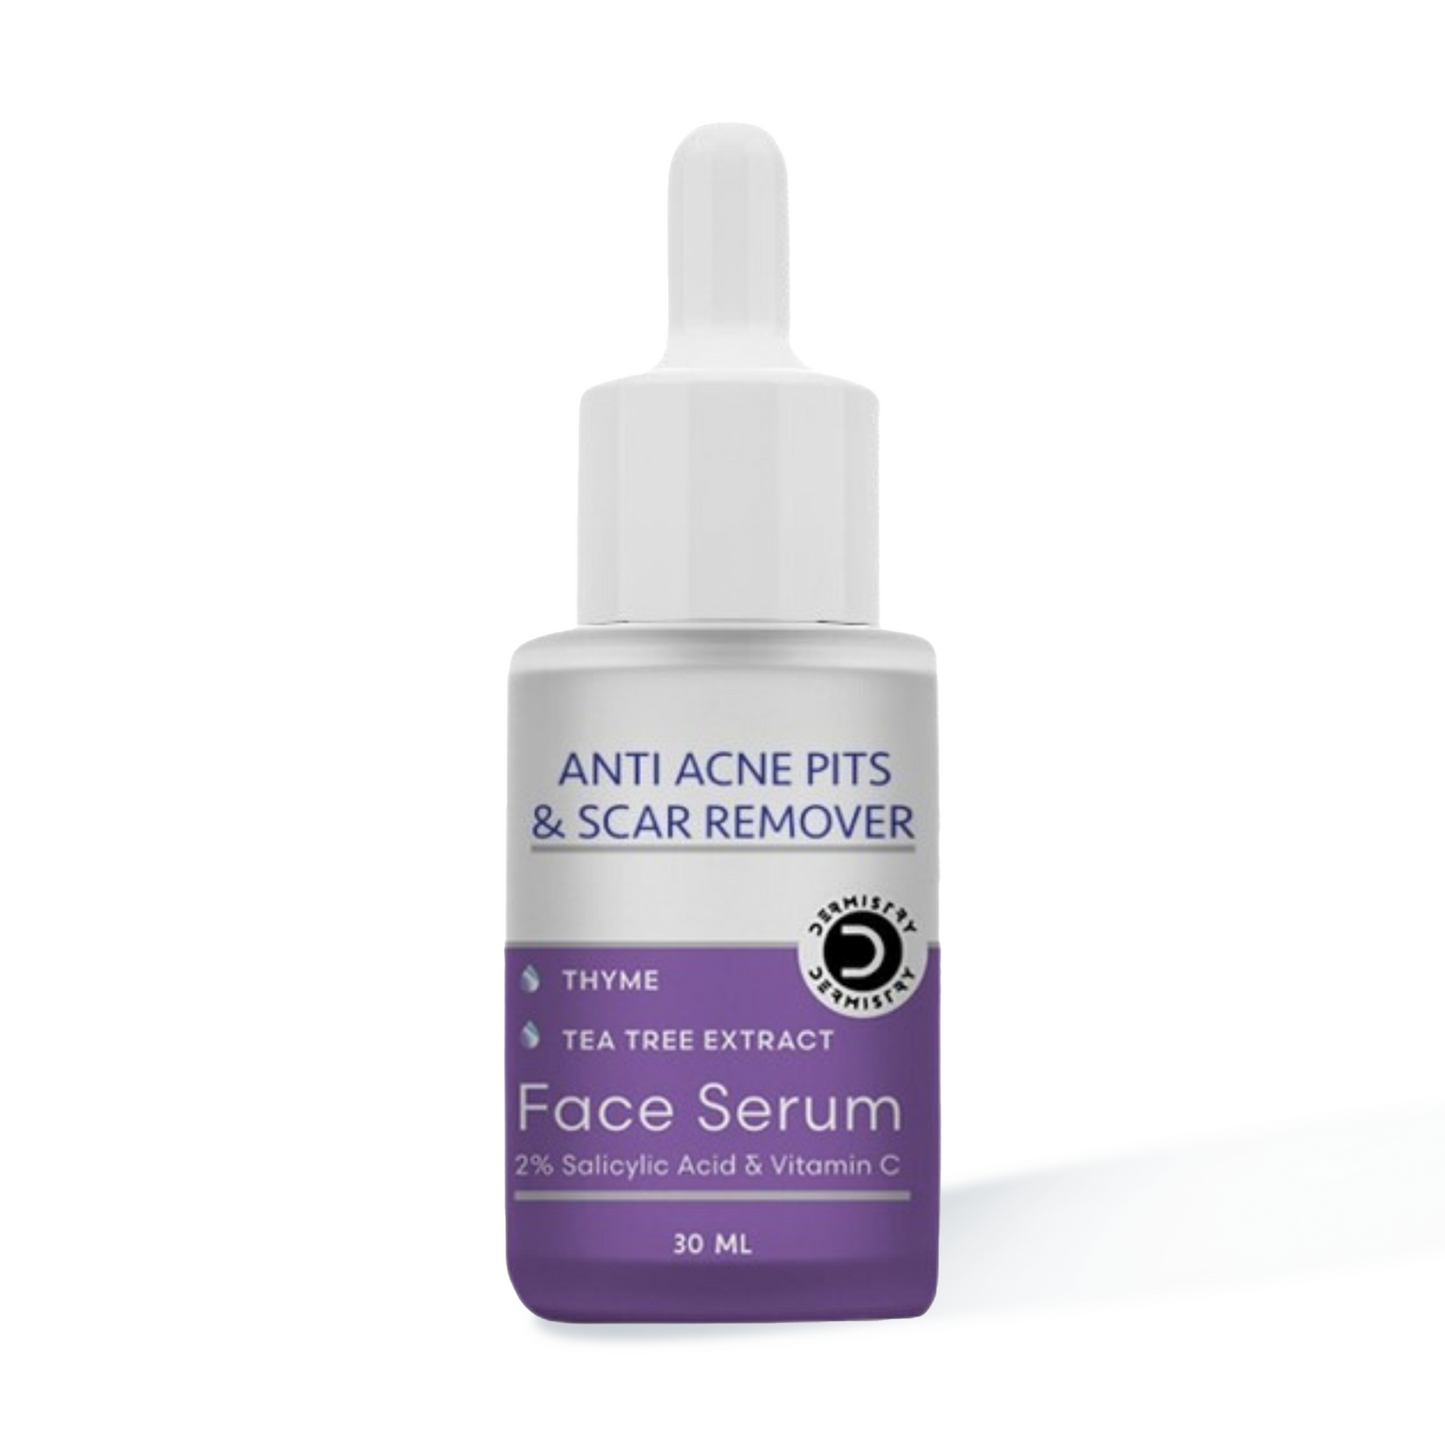 Dermistry 2% Salicylic Acid Anti Acne Pits & Scars Remover Face Serum, 30ml